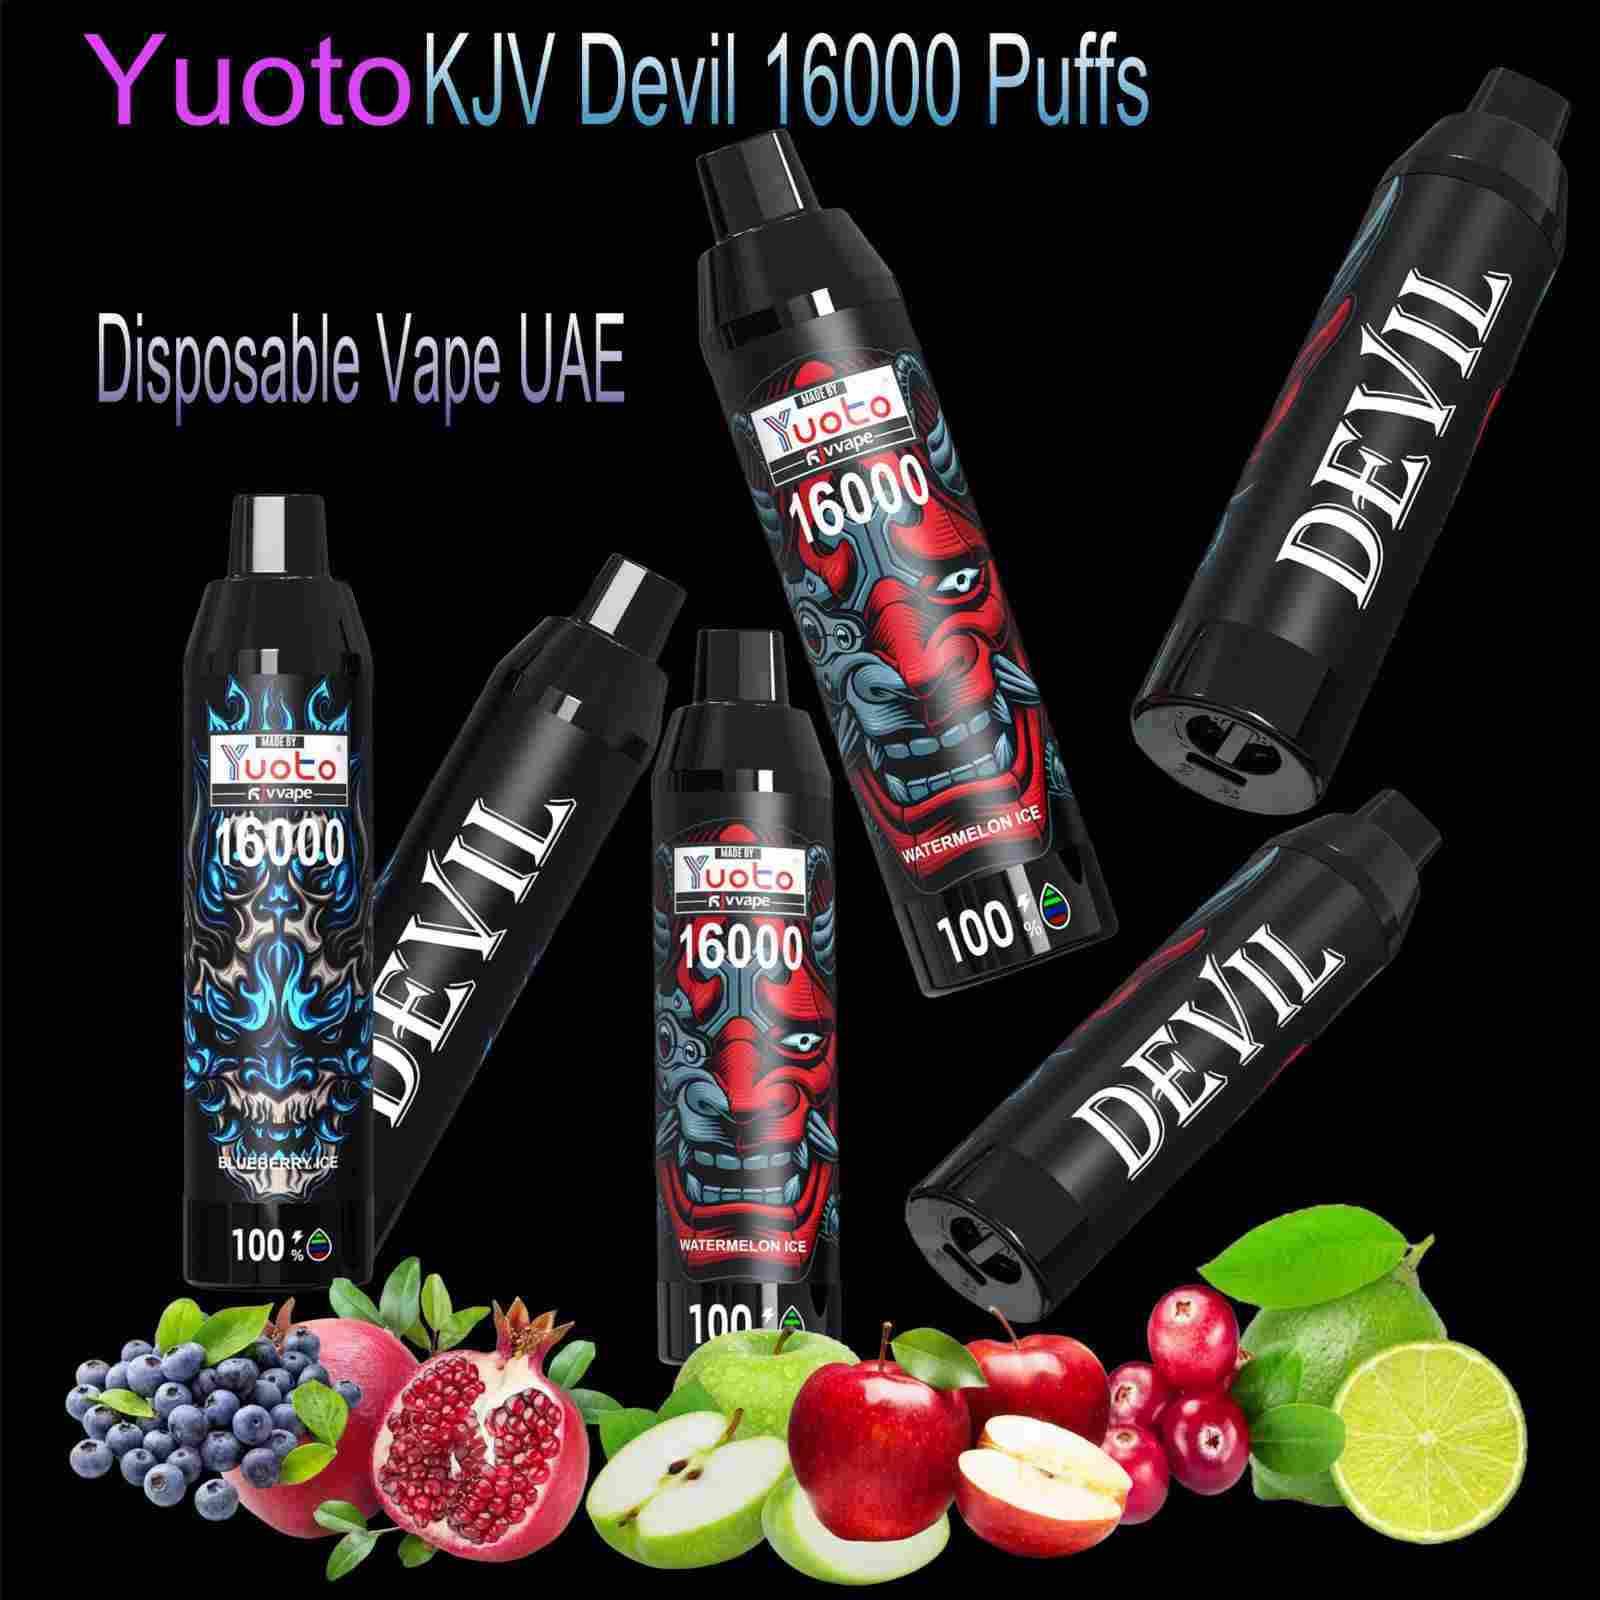 Yuoto Devil KJV 16000 Puffs